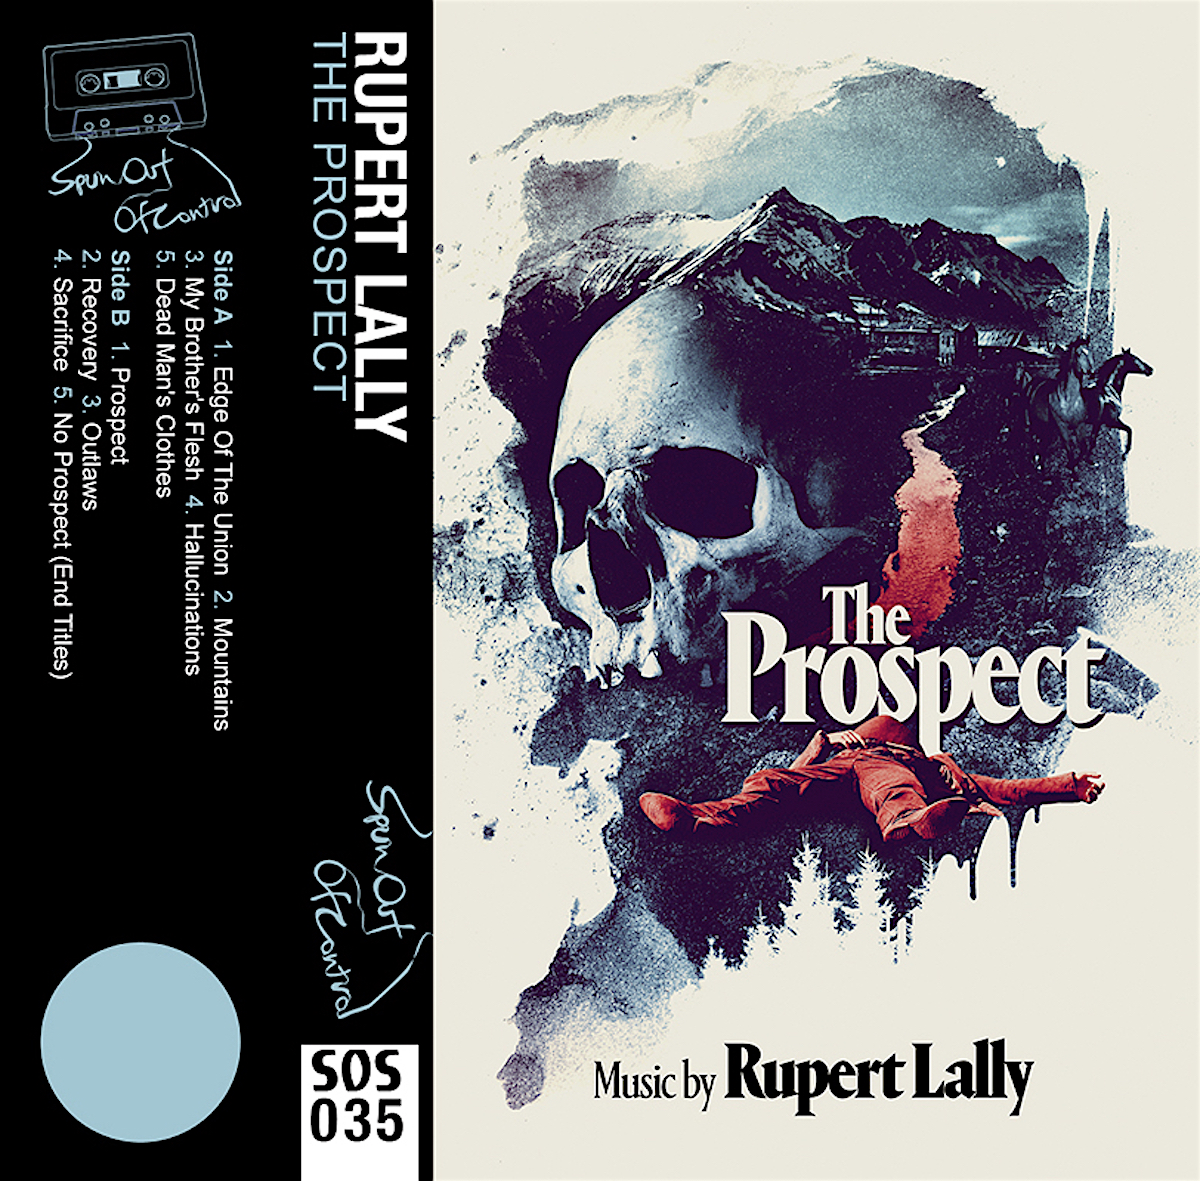 Rupert Lally The Prospect cassette on Spun Out Of Control .jpg